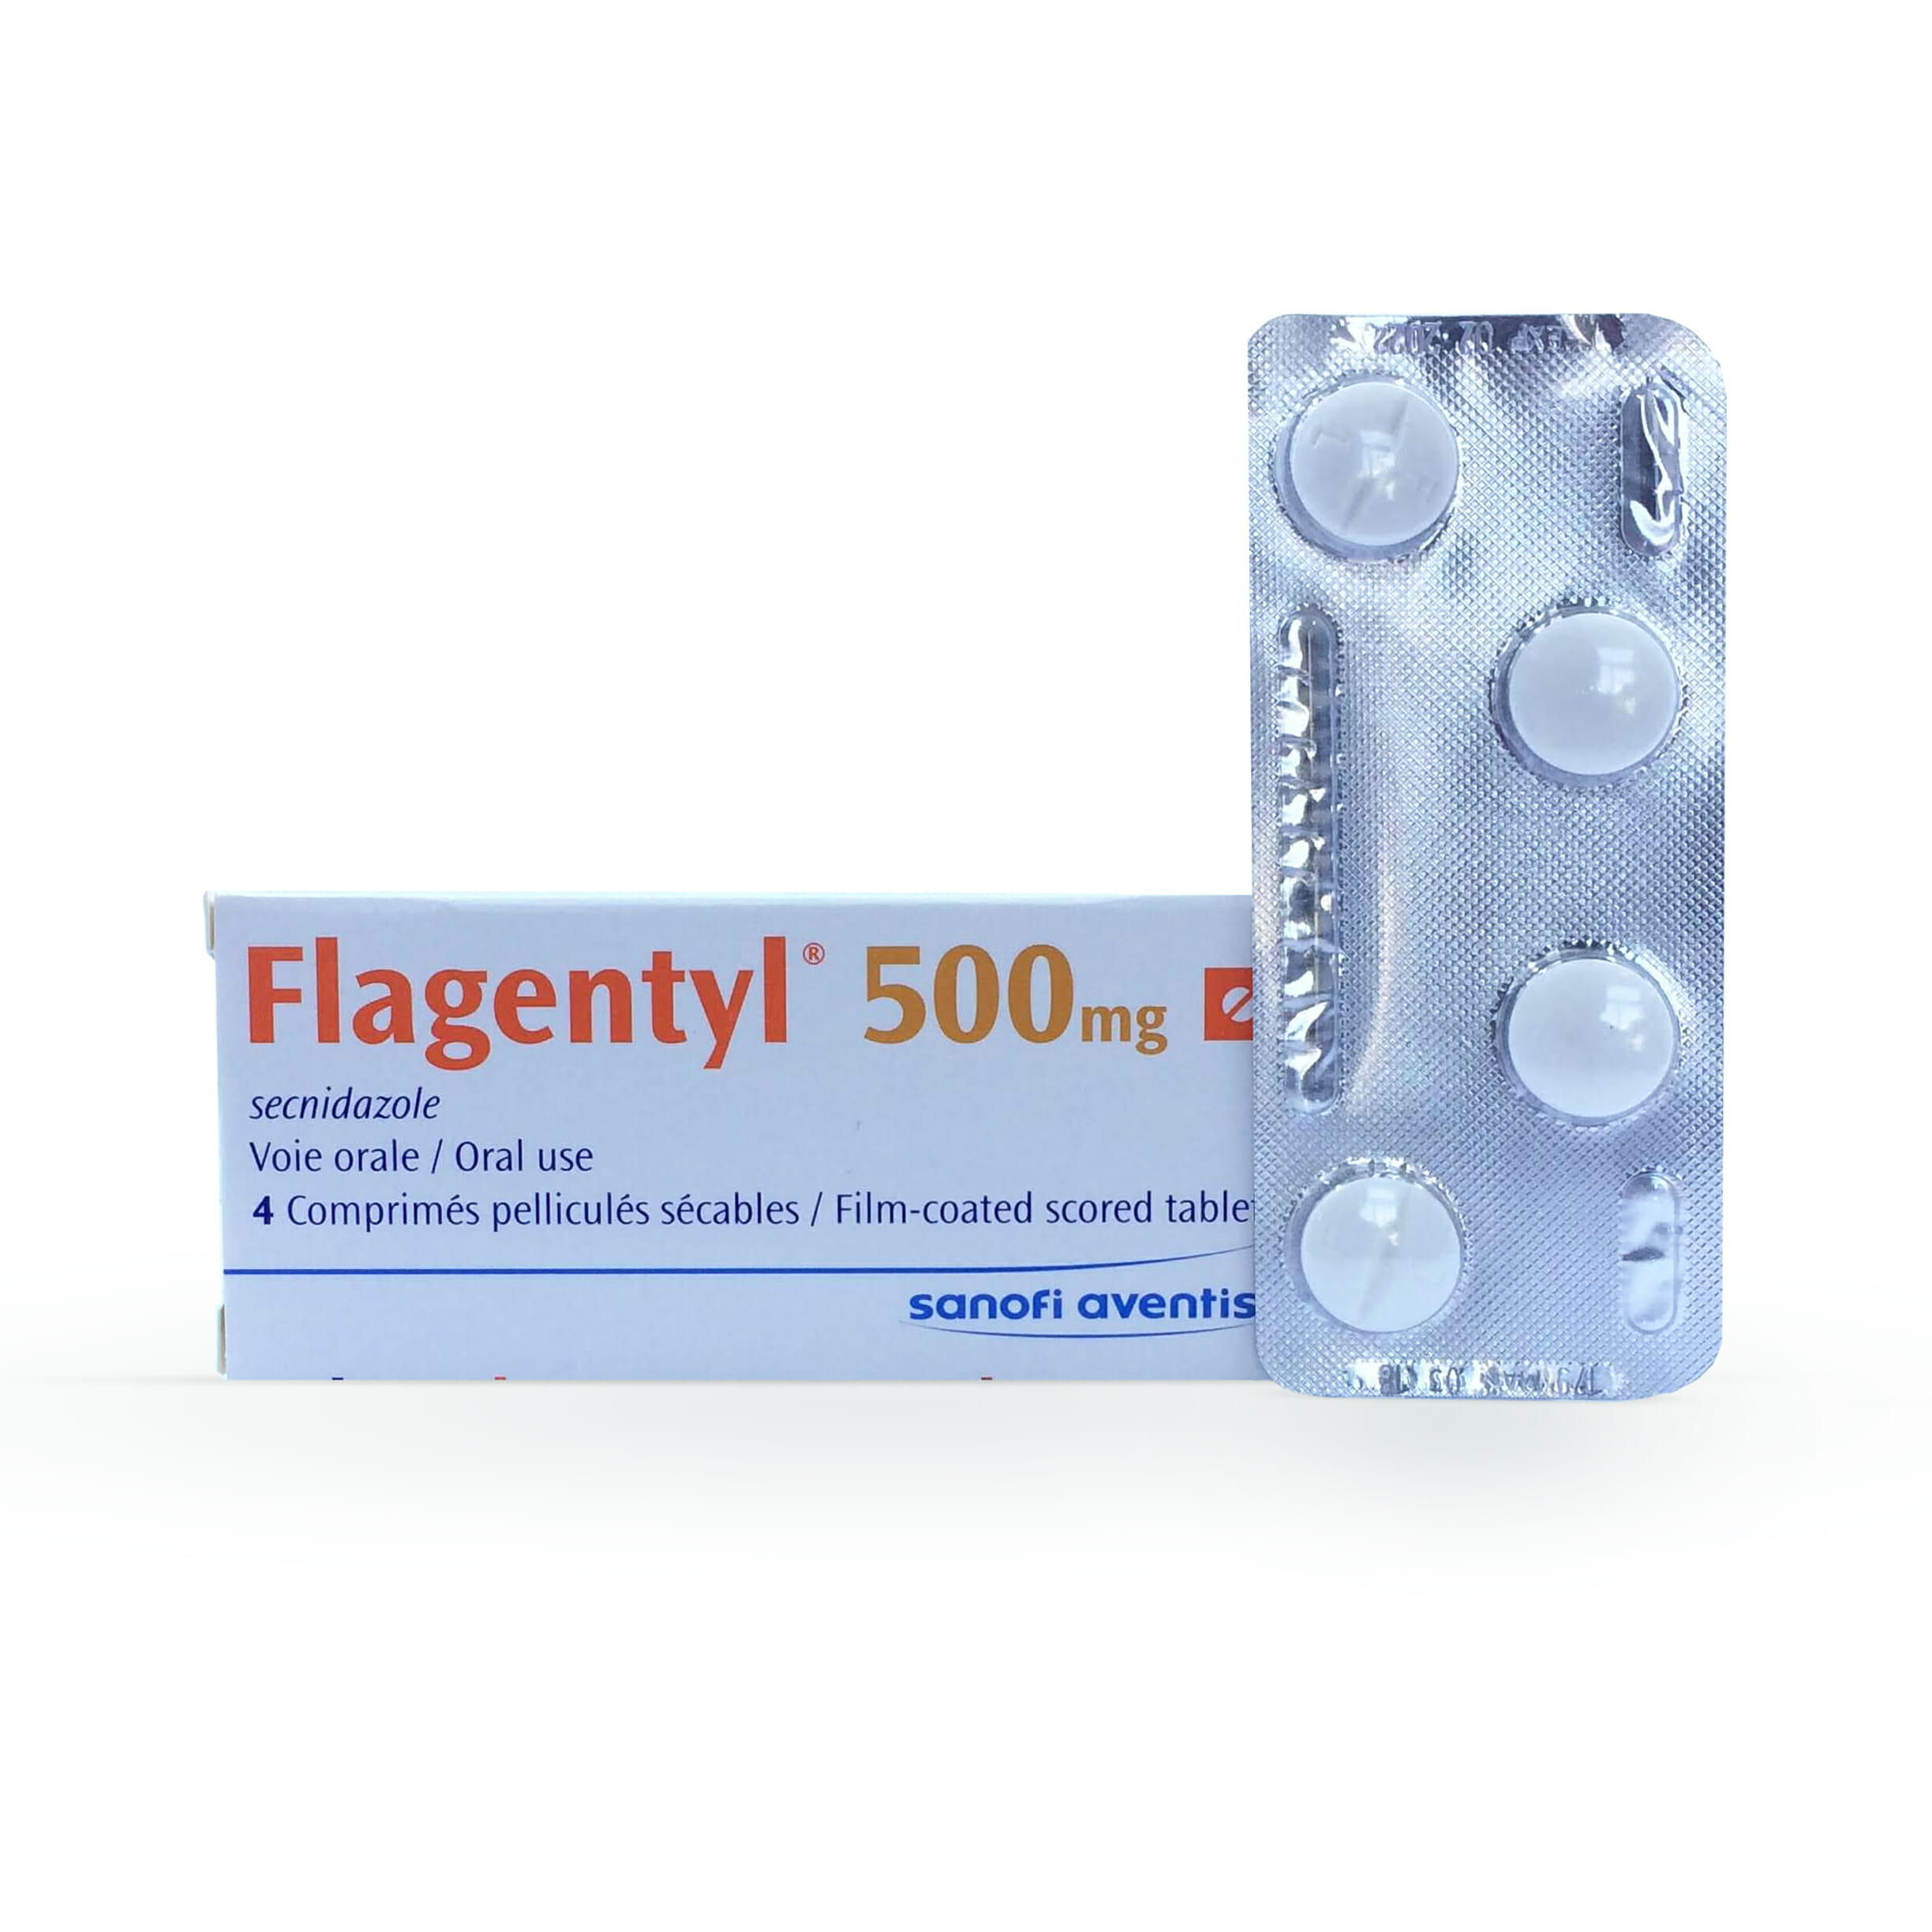 Azithromycin 250 mg price walgreens